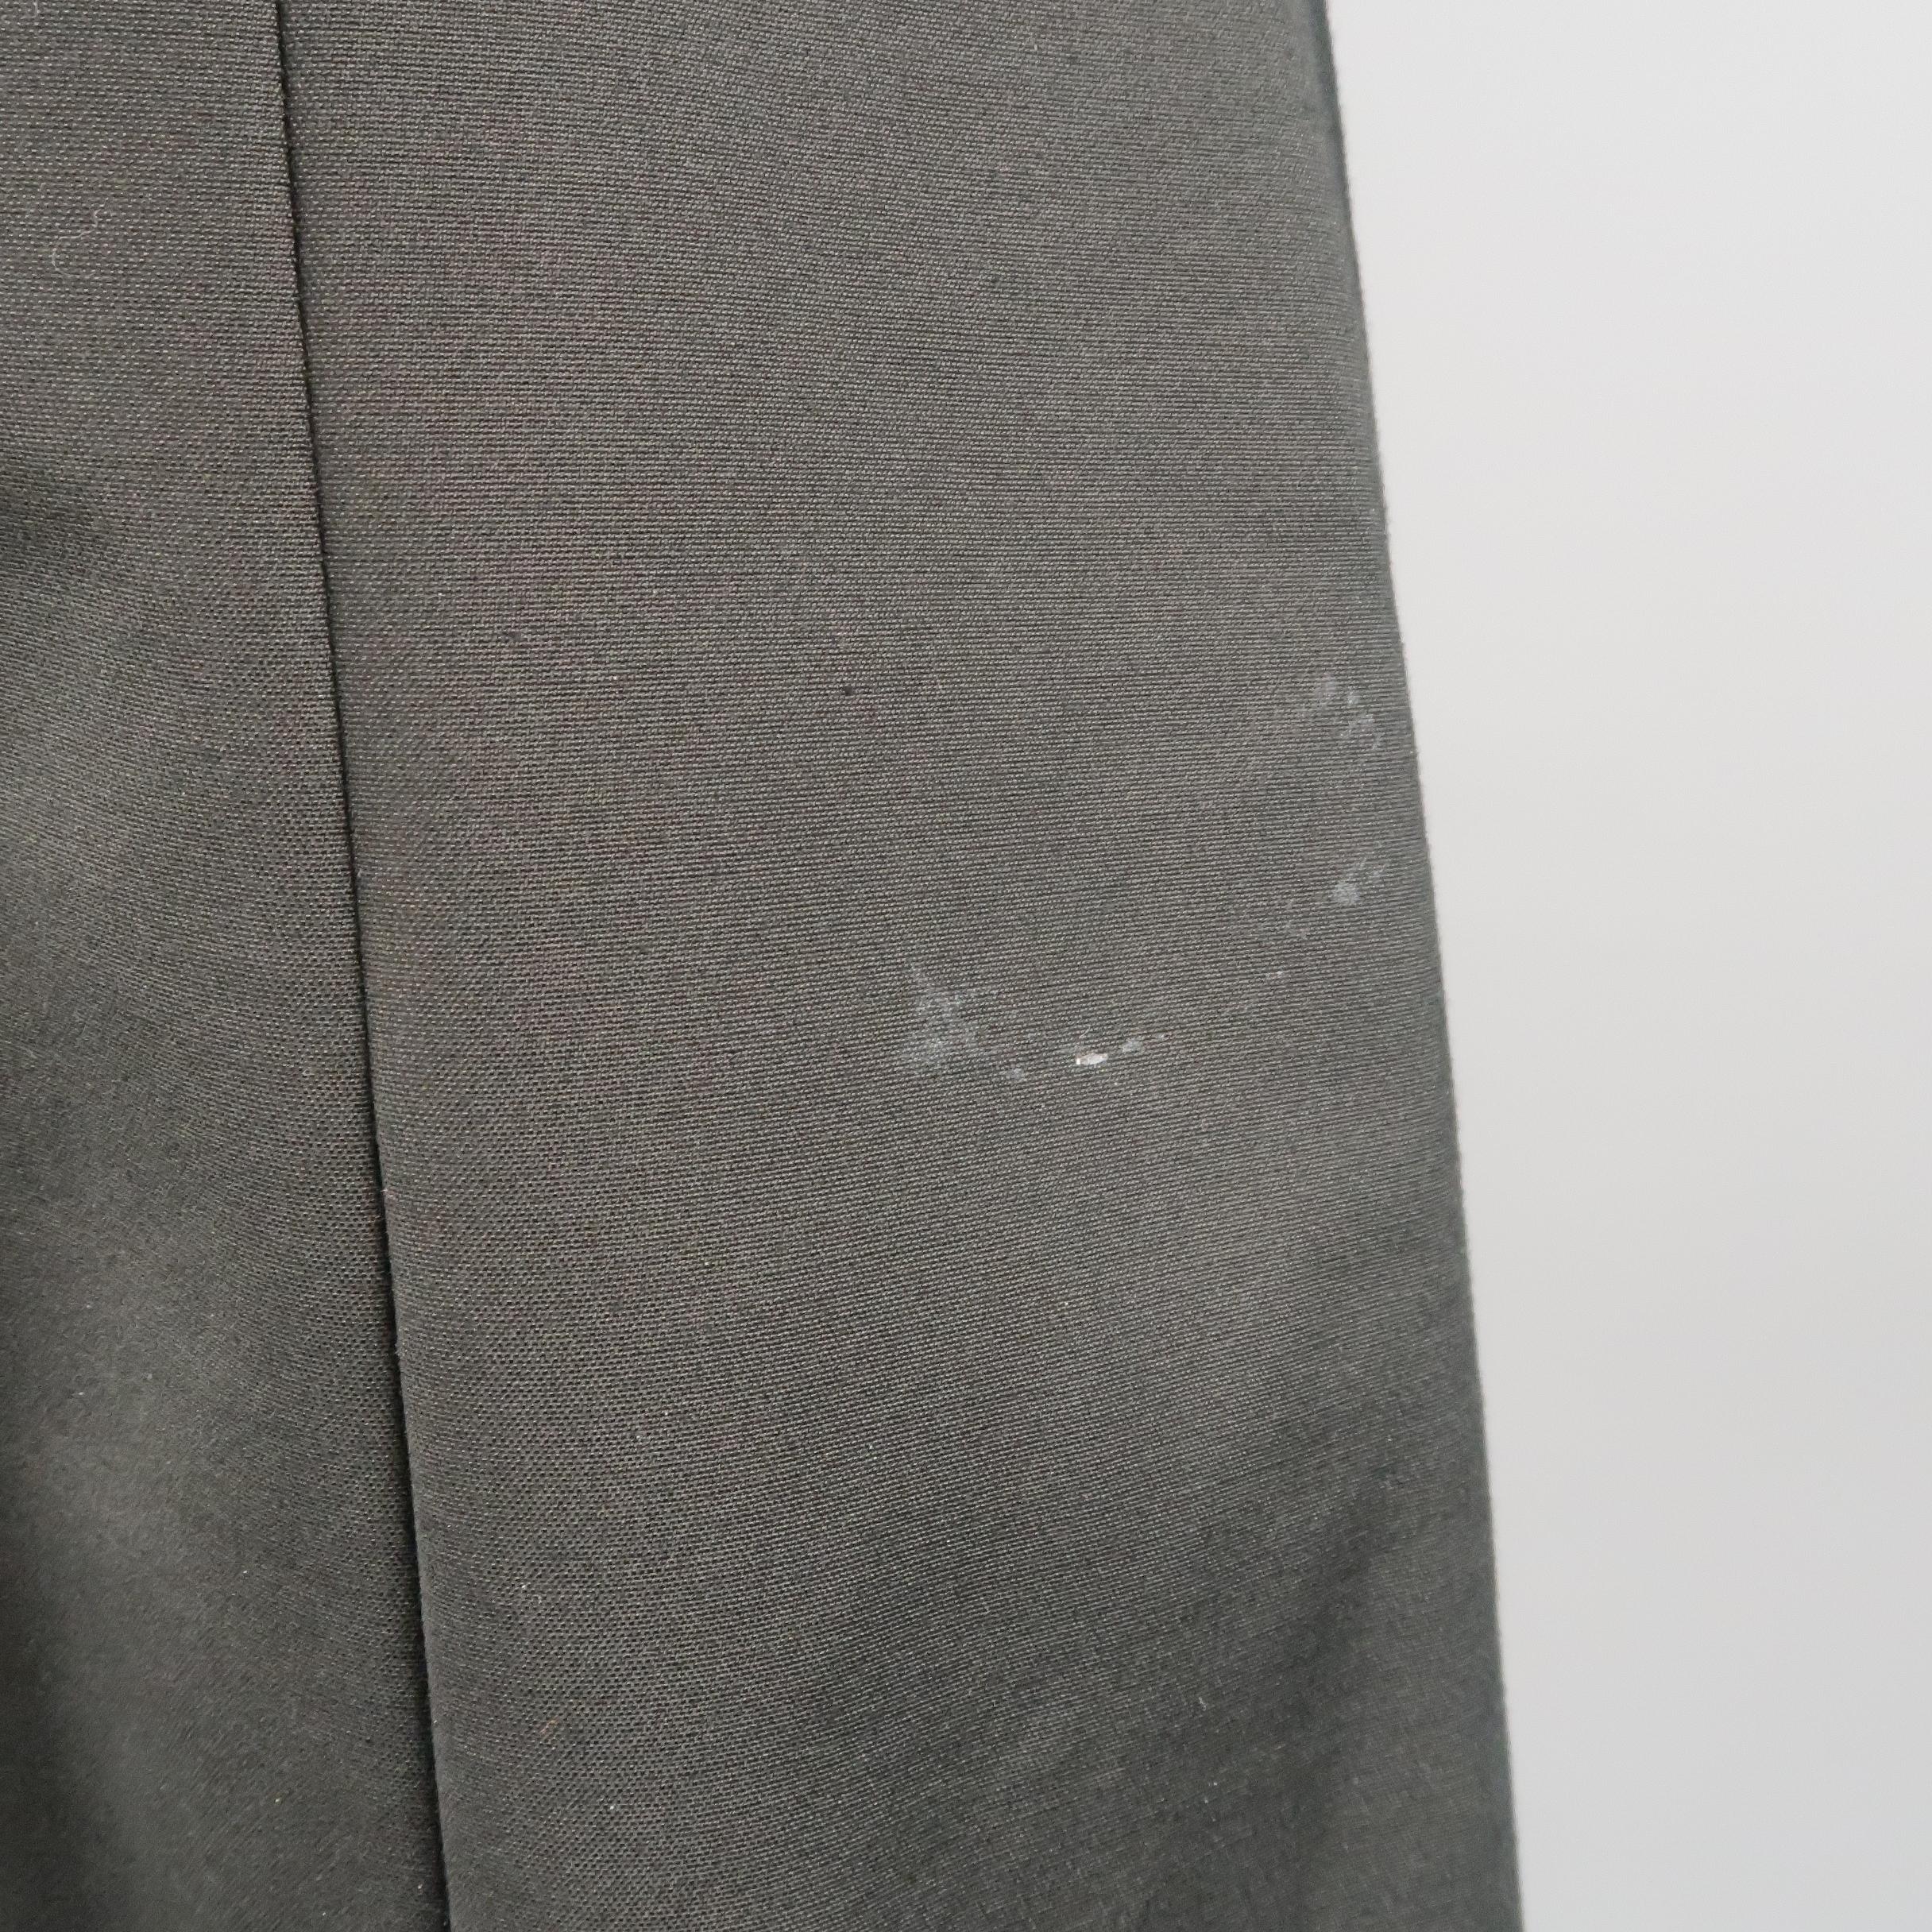 VERSUS by GIANNI VERSACE Size 6 Black Cotton Asymmetrical Skirt 3